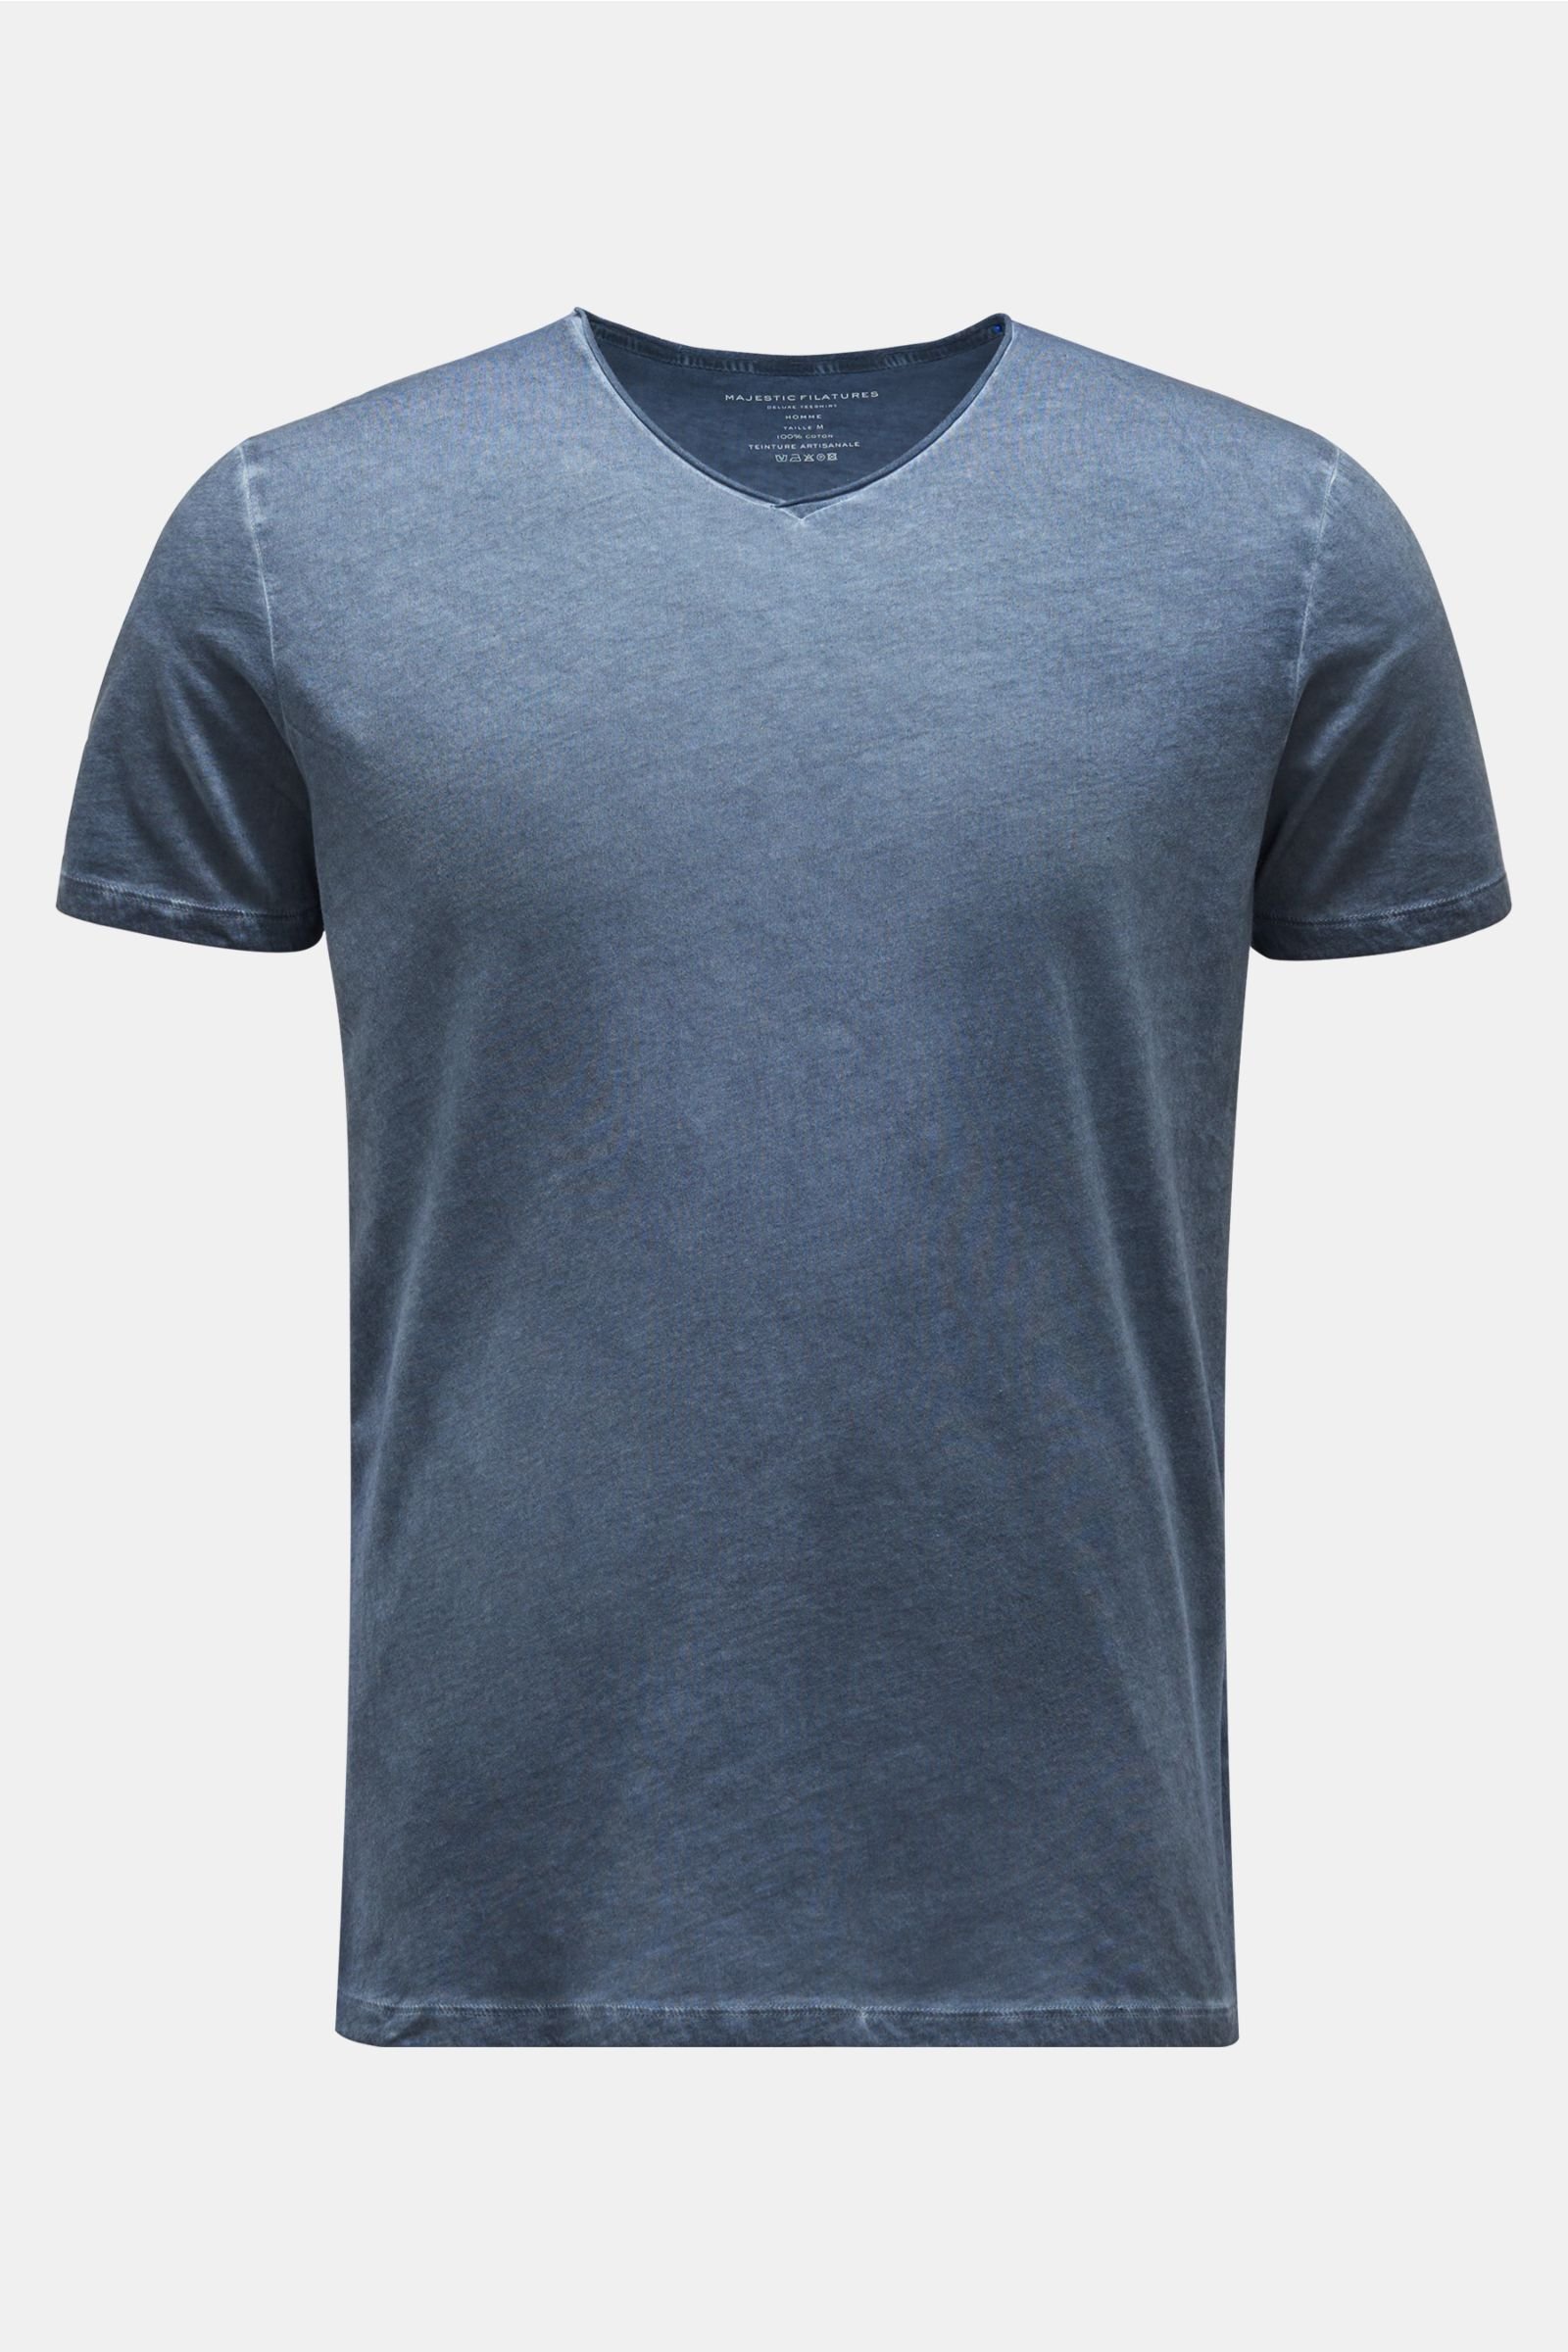 V-neck T-shirt grey-blue